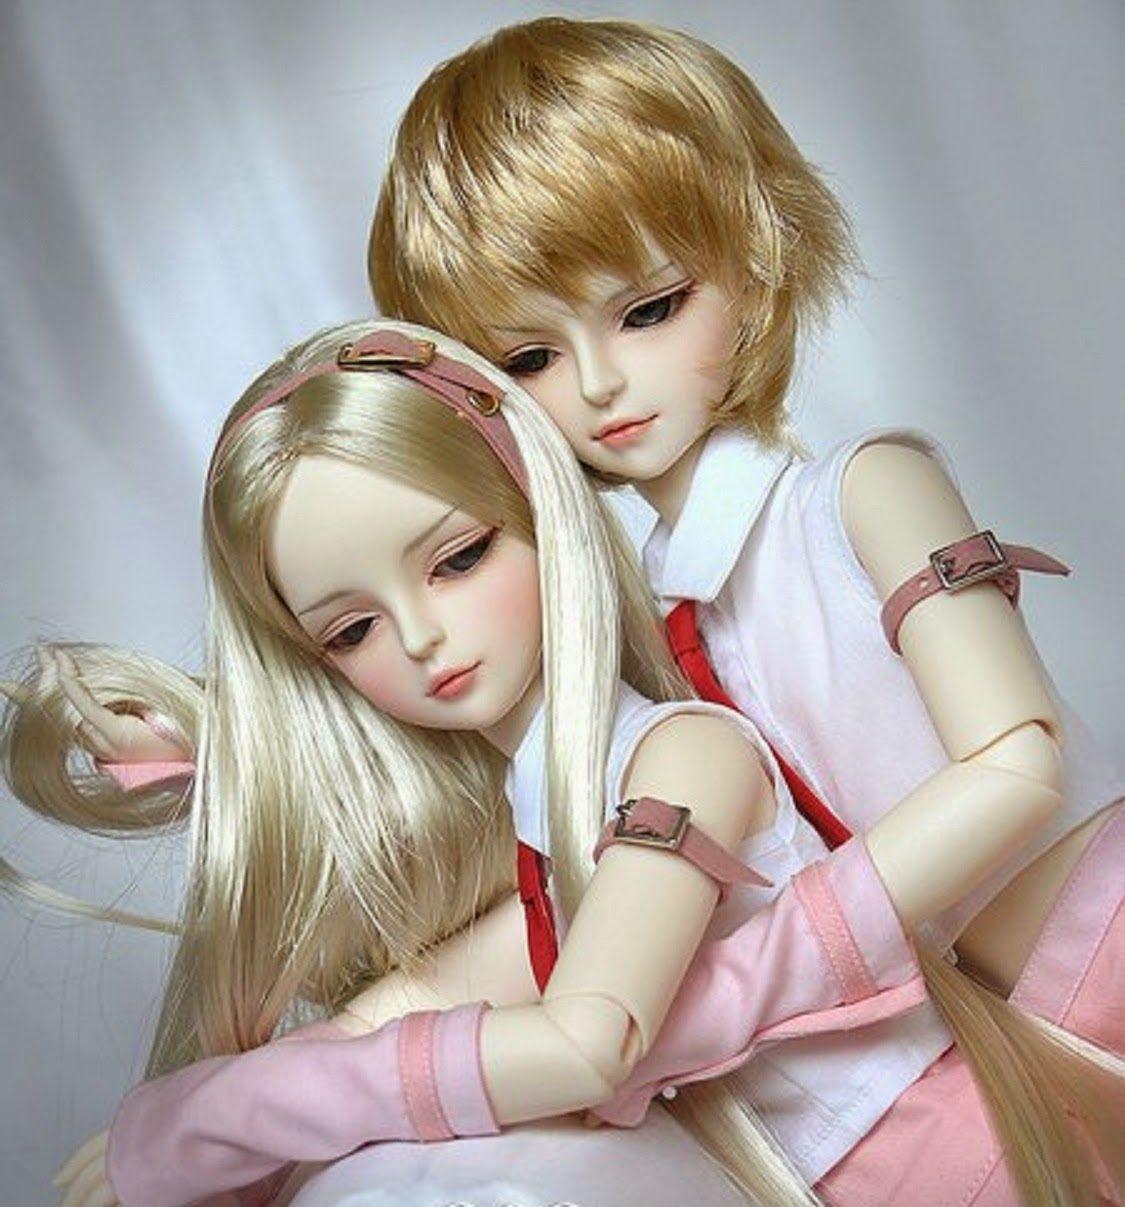 Beautiful And Cute Dolls Image HD Wallpaper 4u wallpaper